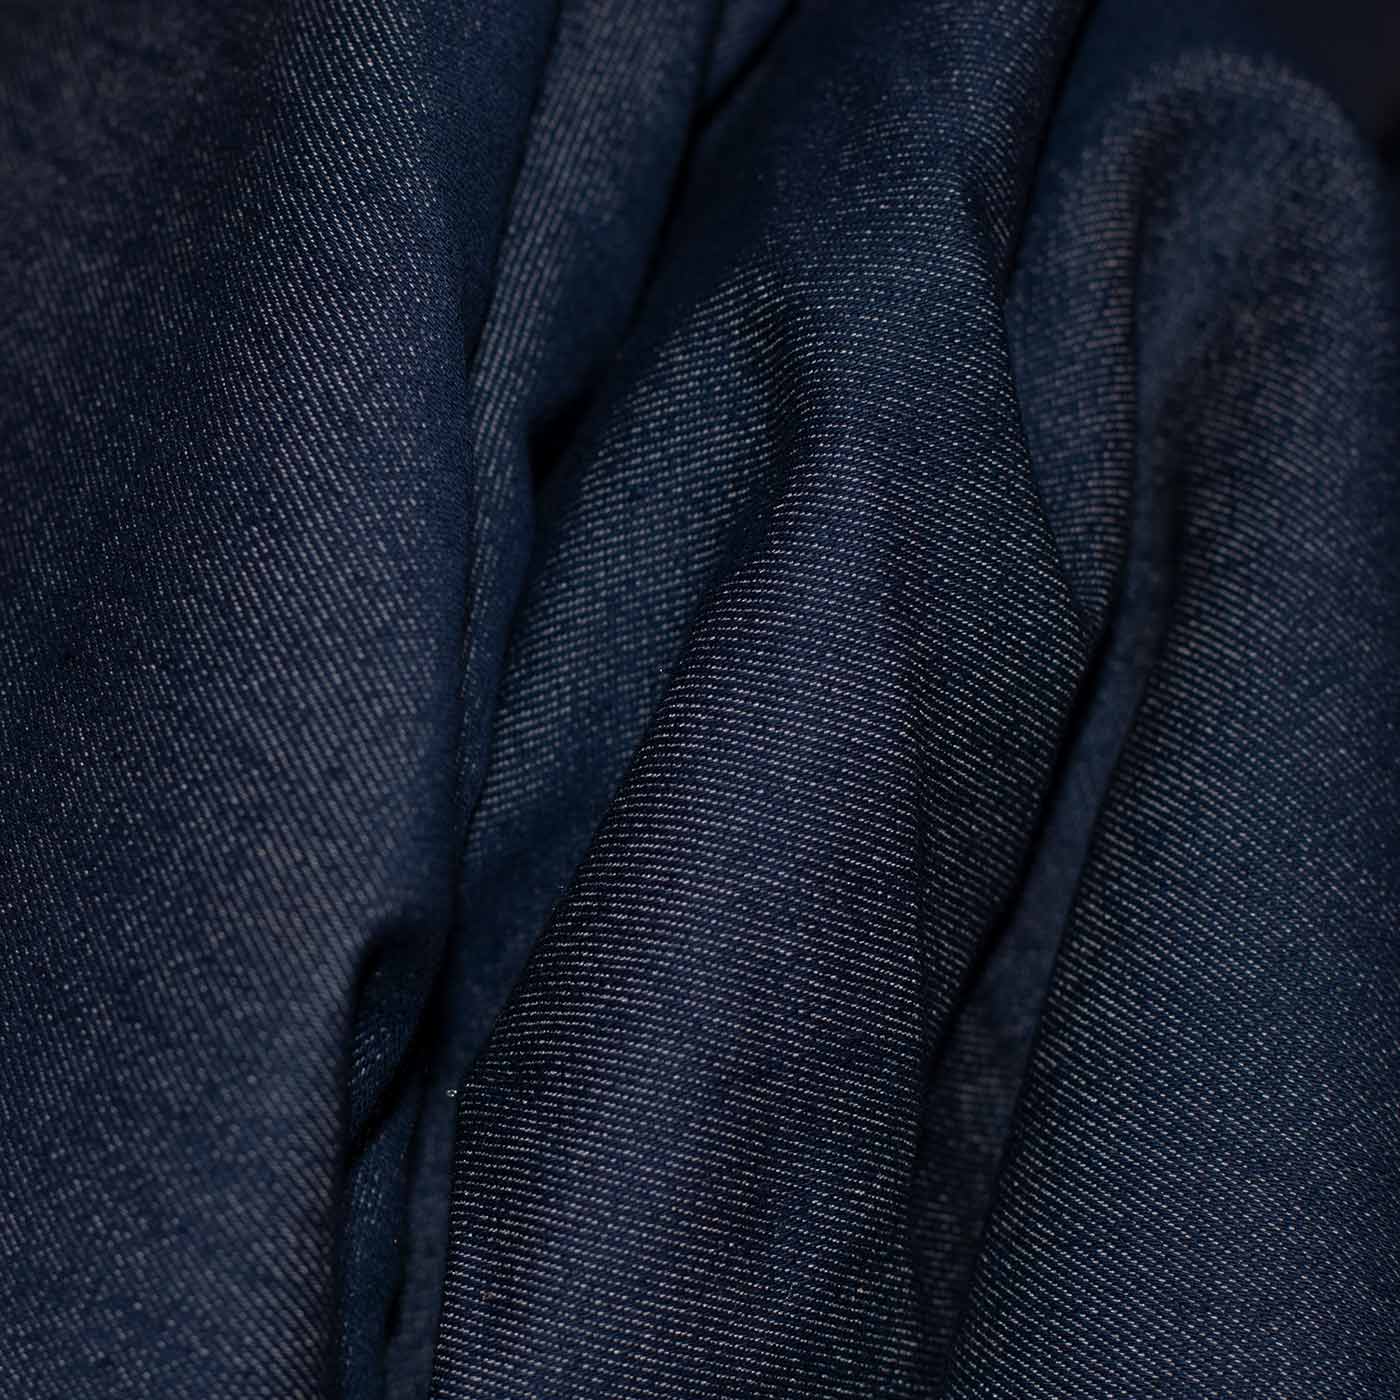 Solid Blue Denim Fabric